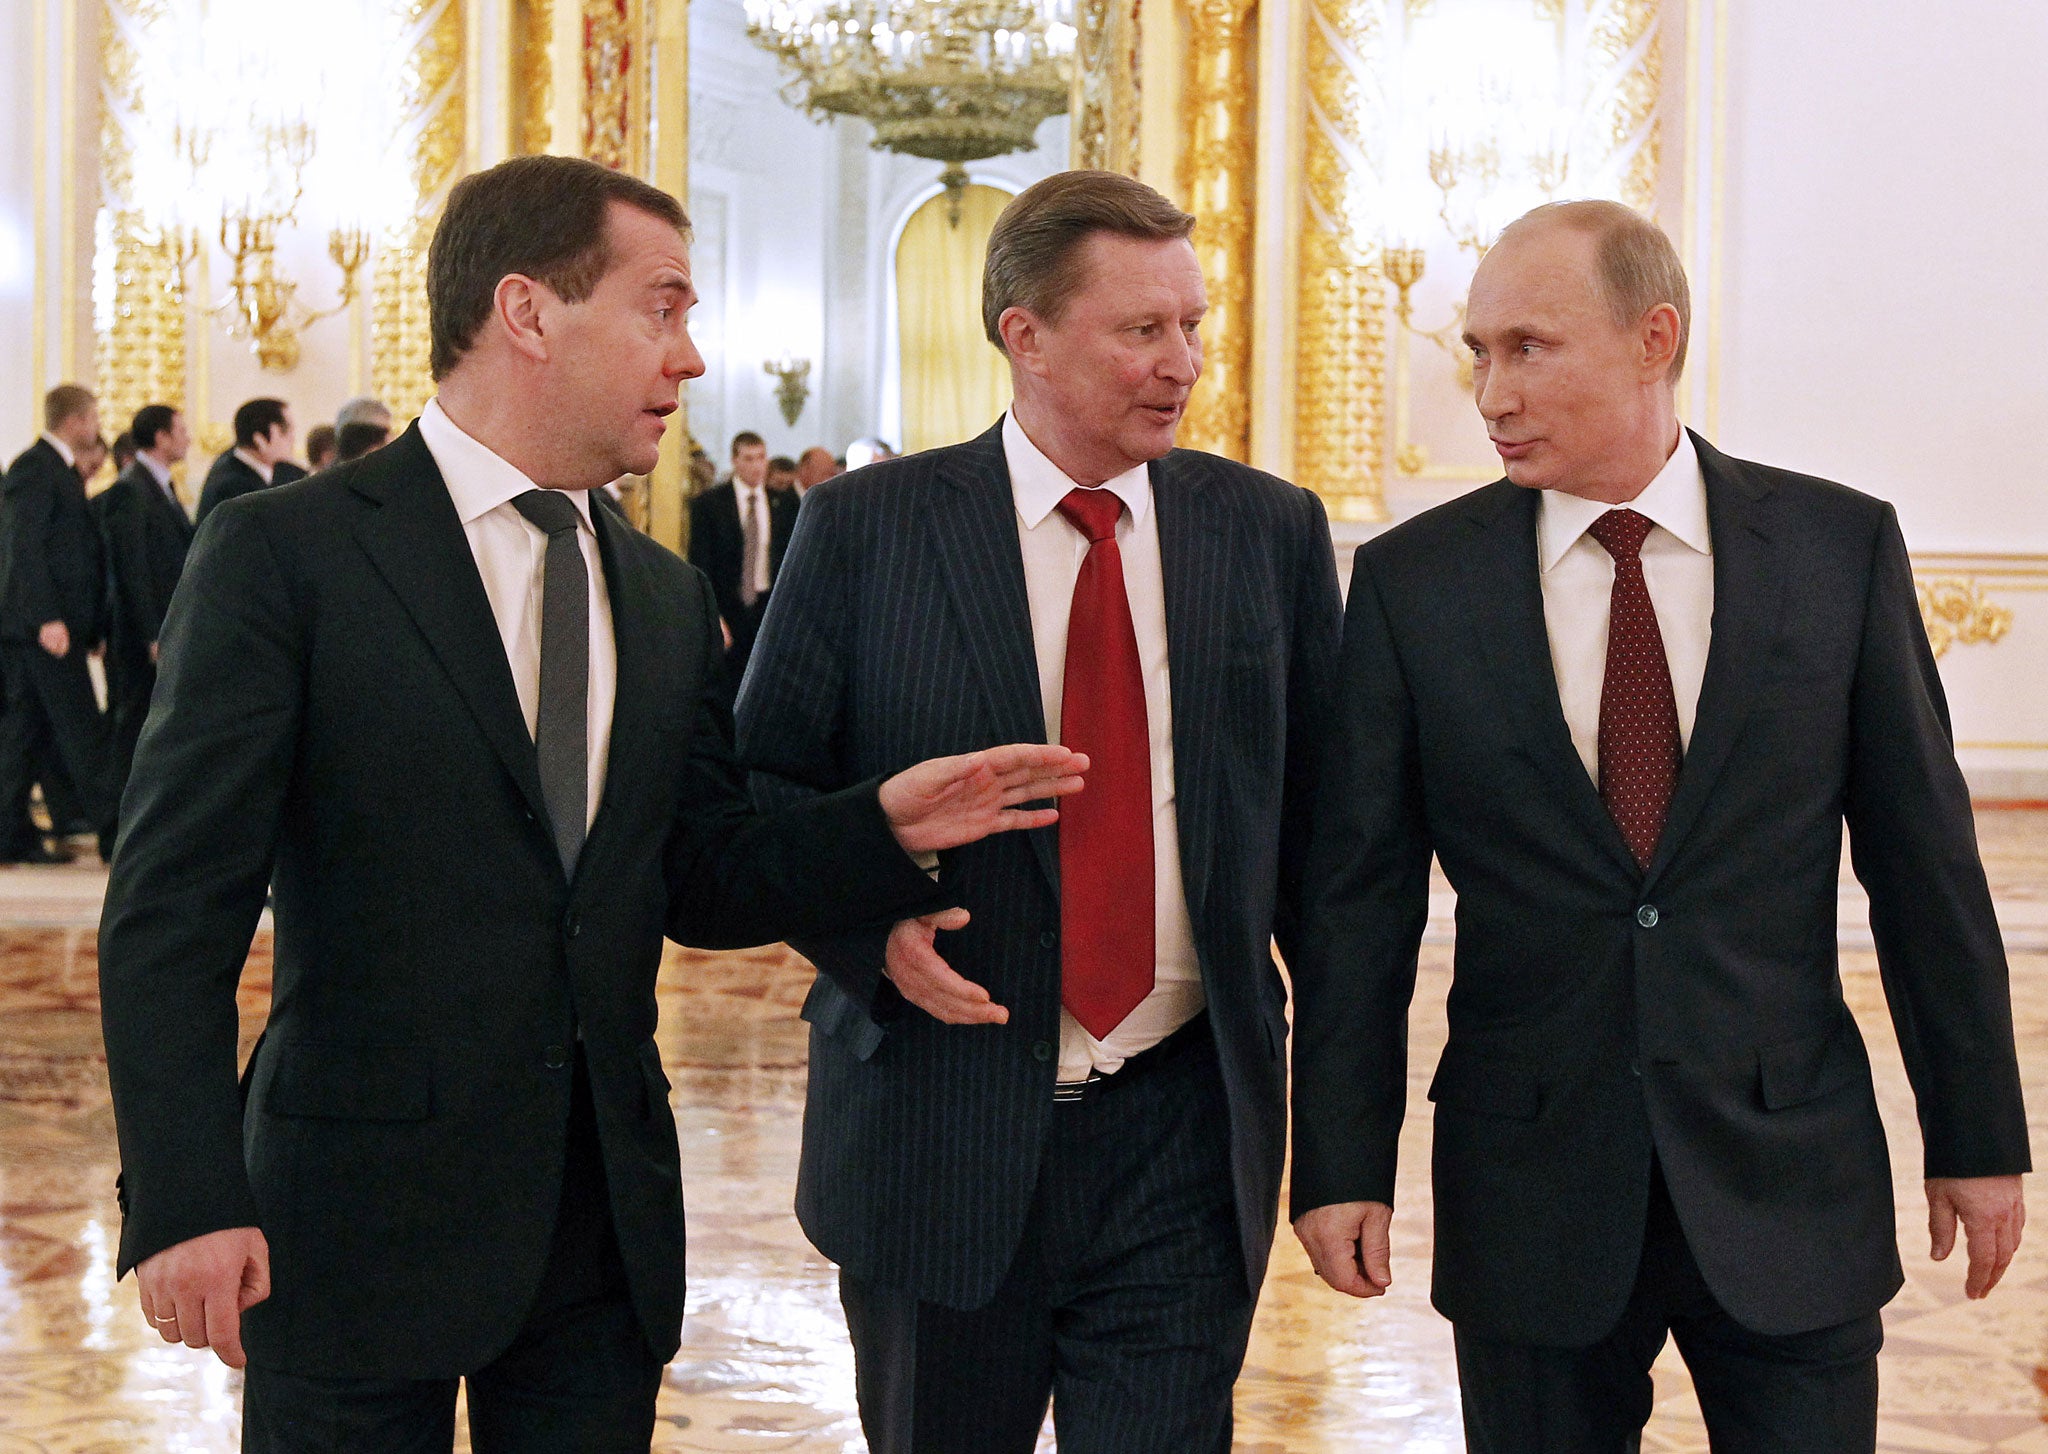 Sergei Ivanov stands in between Dmitry Medvedev and President Putin